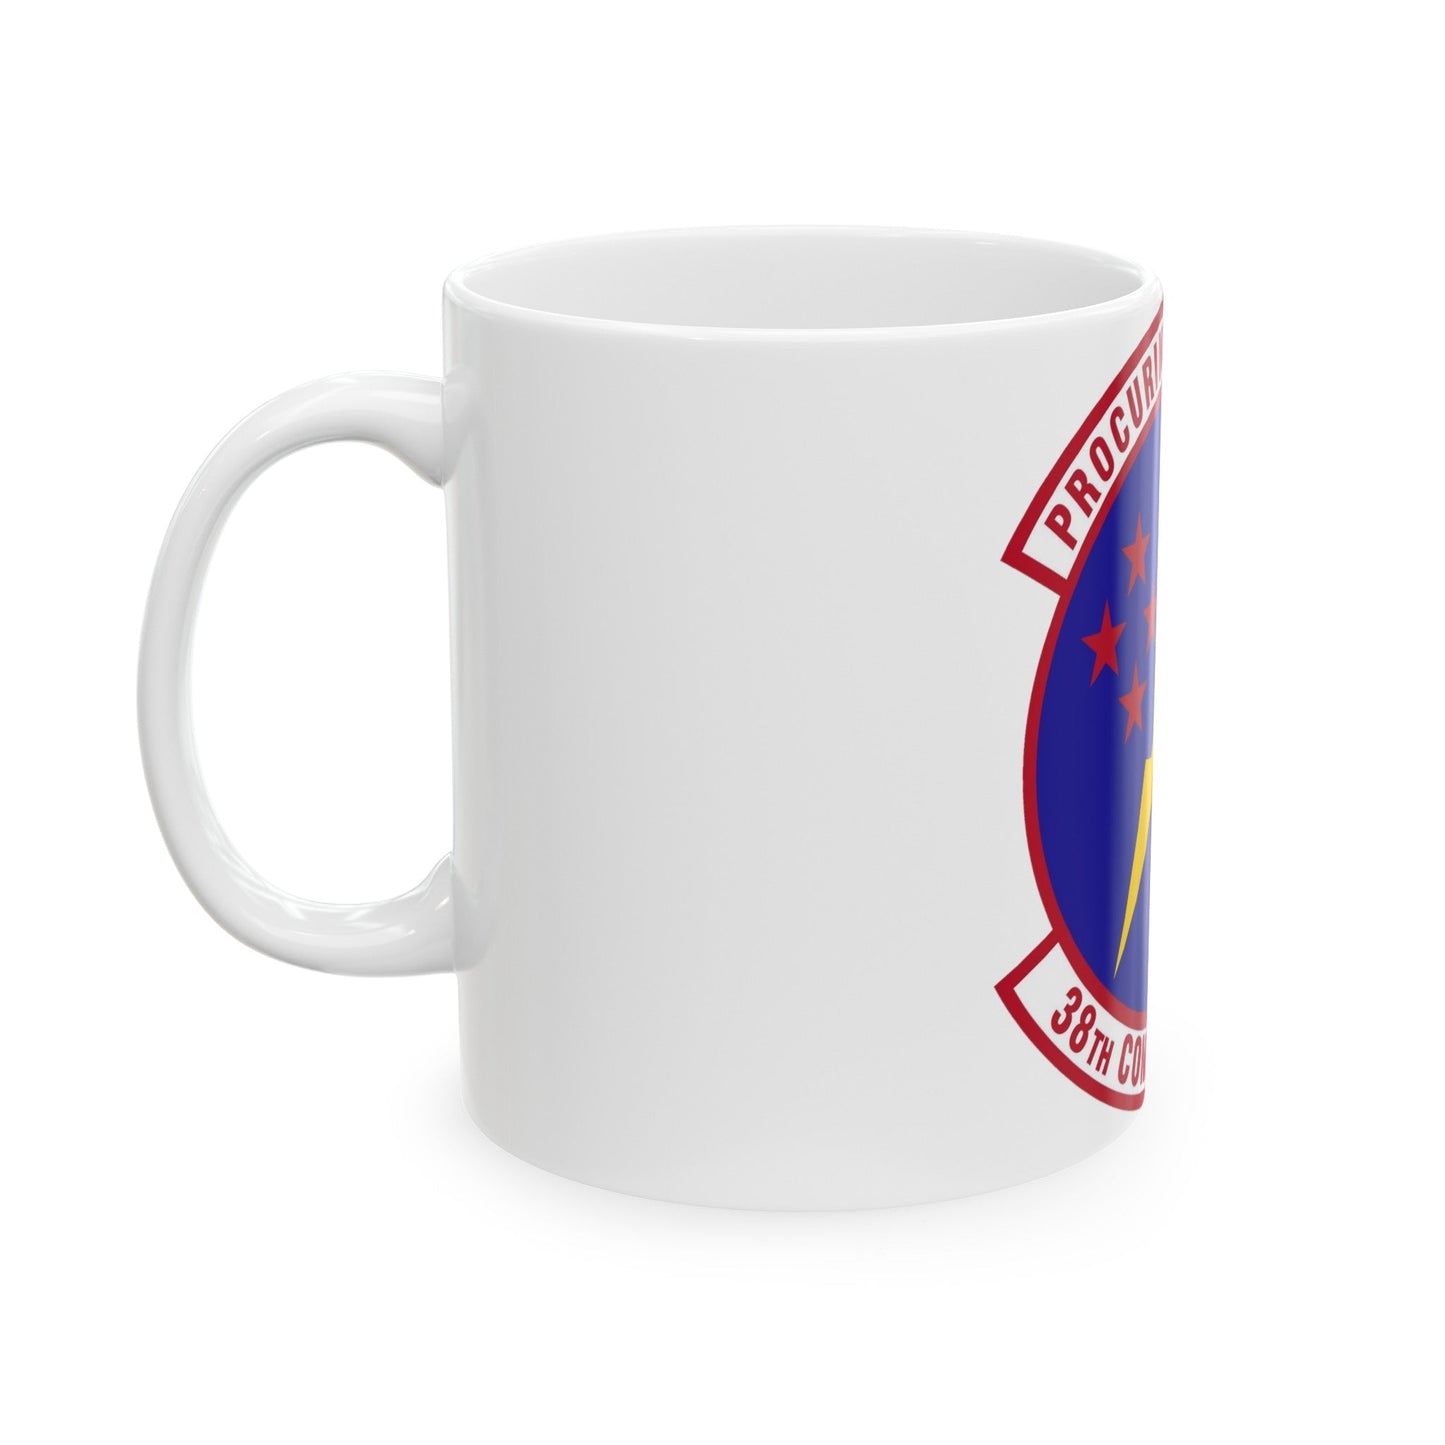 38th Contracting Squadron (U.S. Air Force) White Coffee Mug